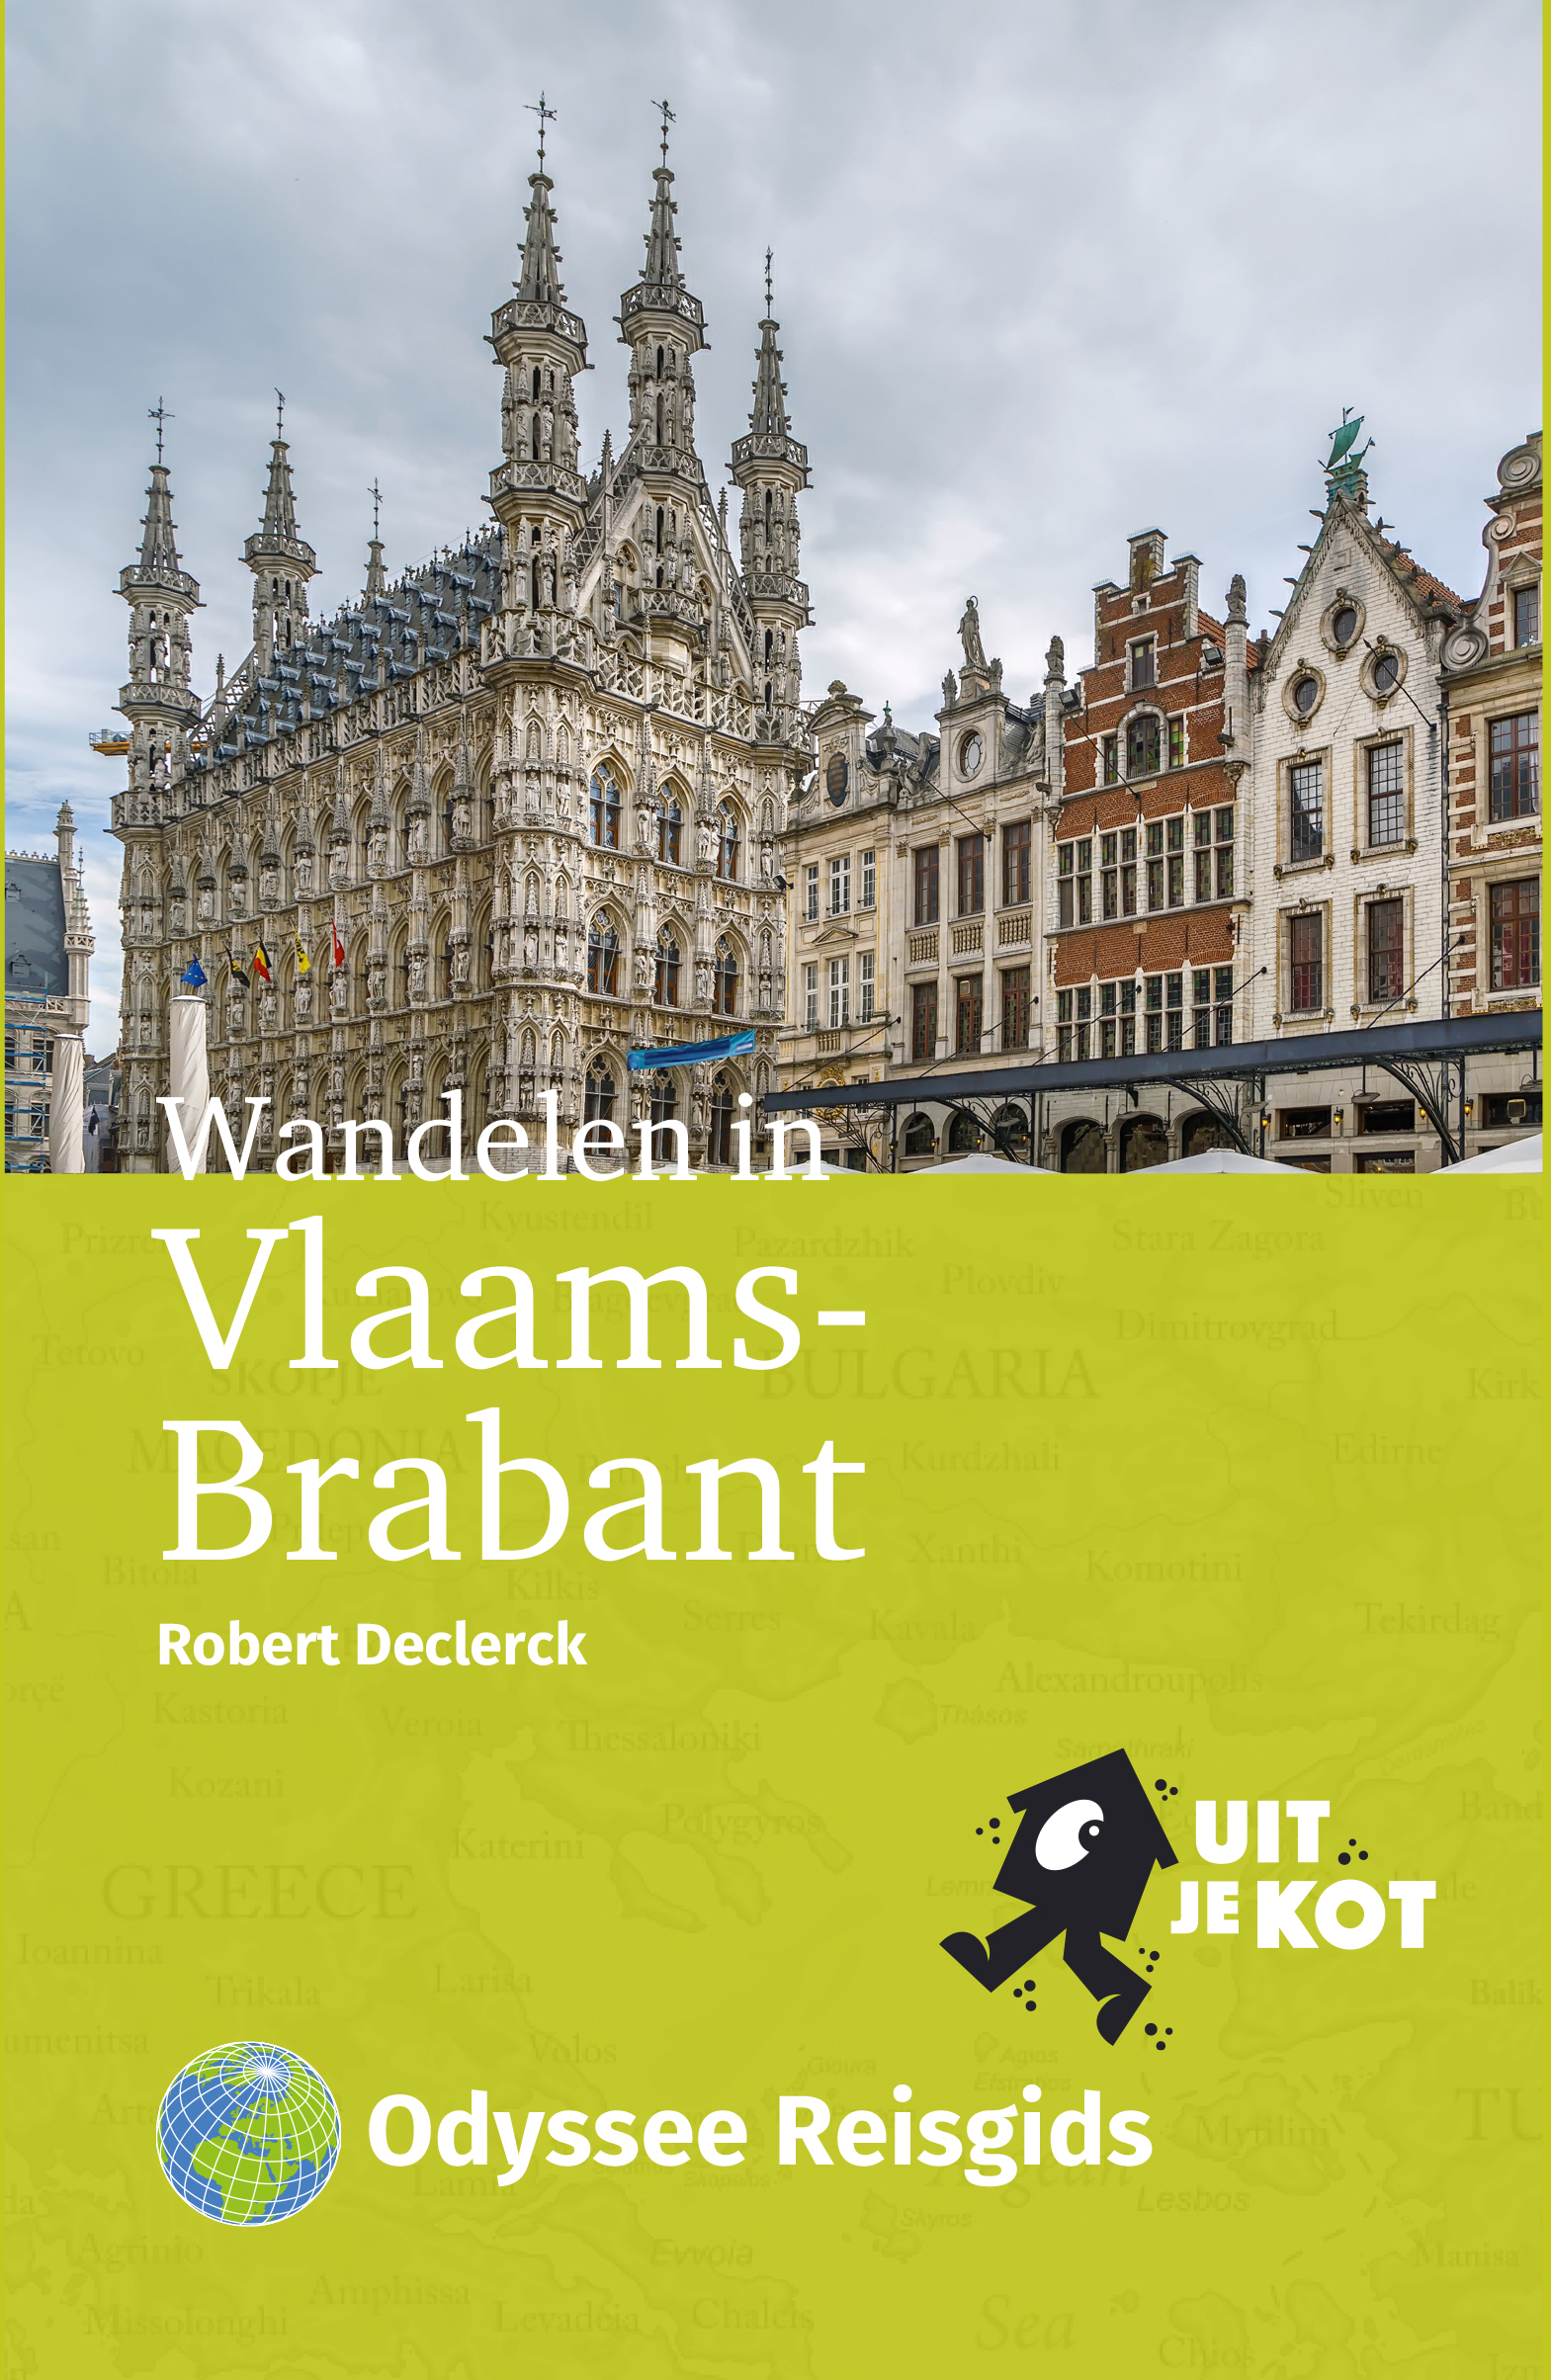 Vlaams-Brabant